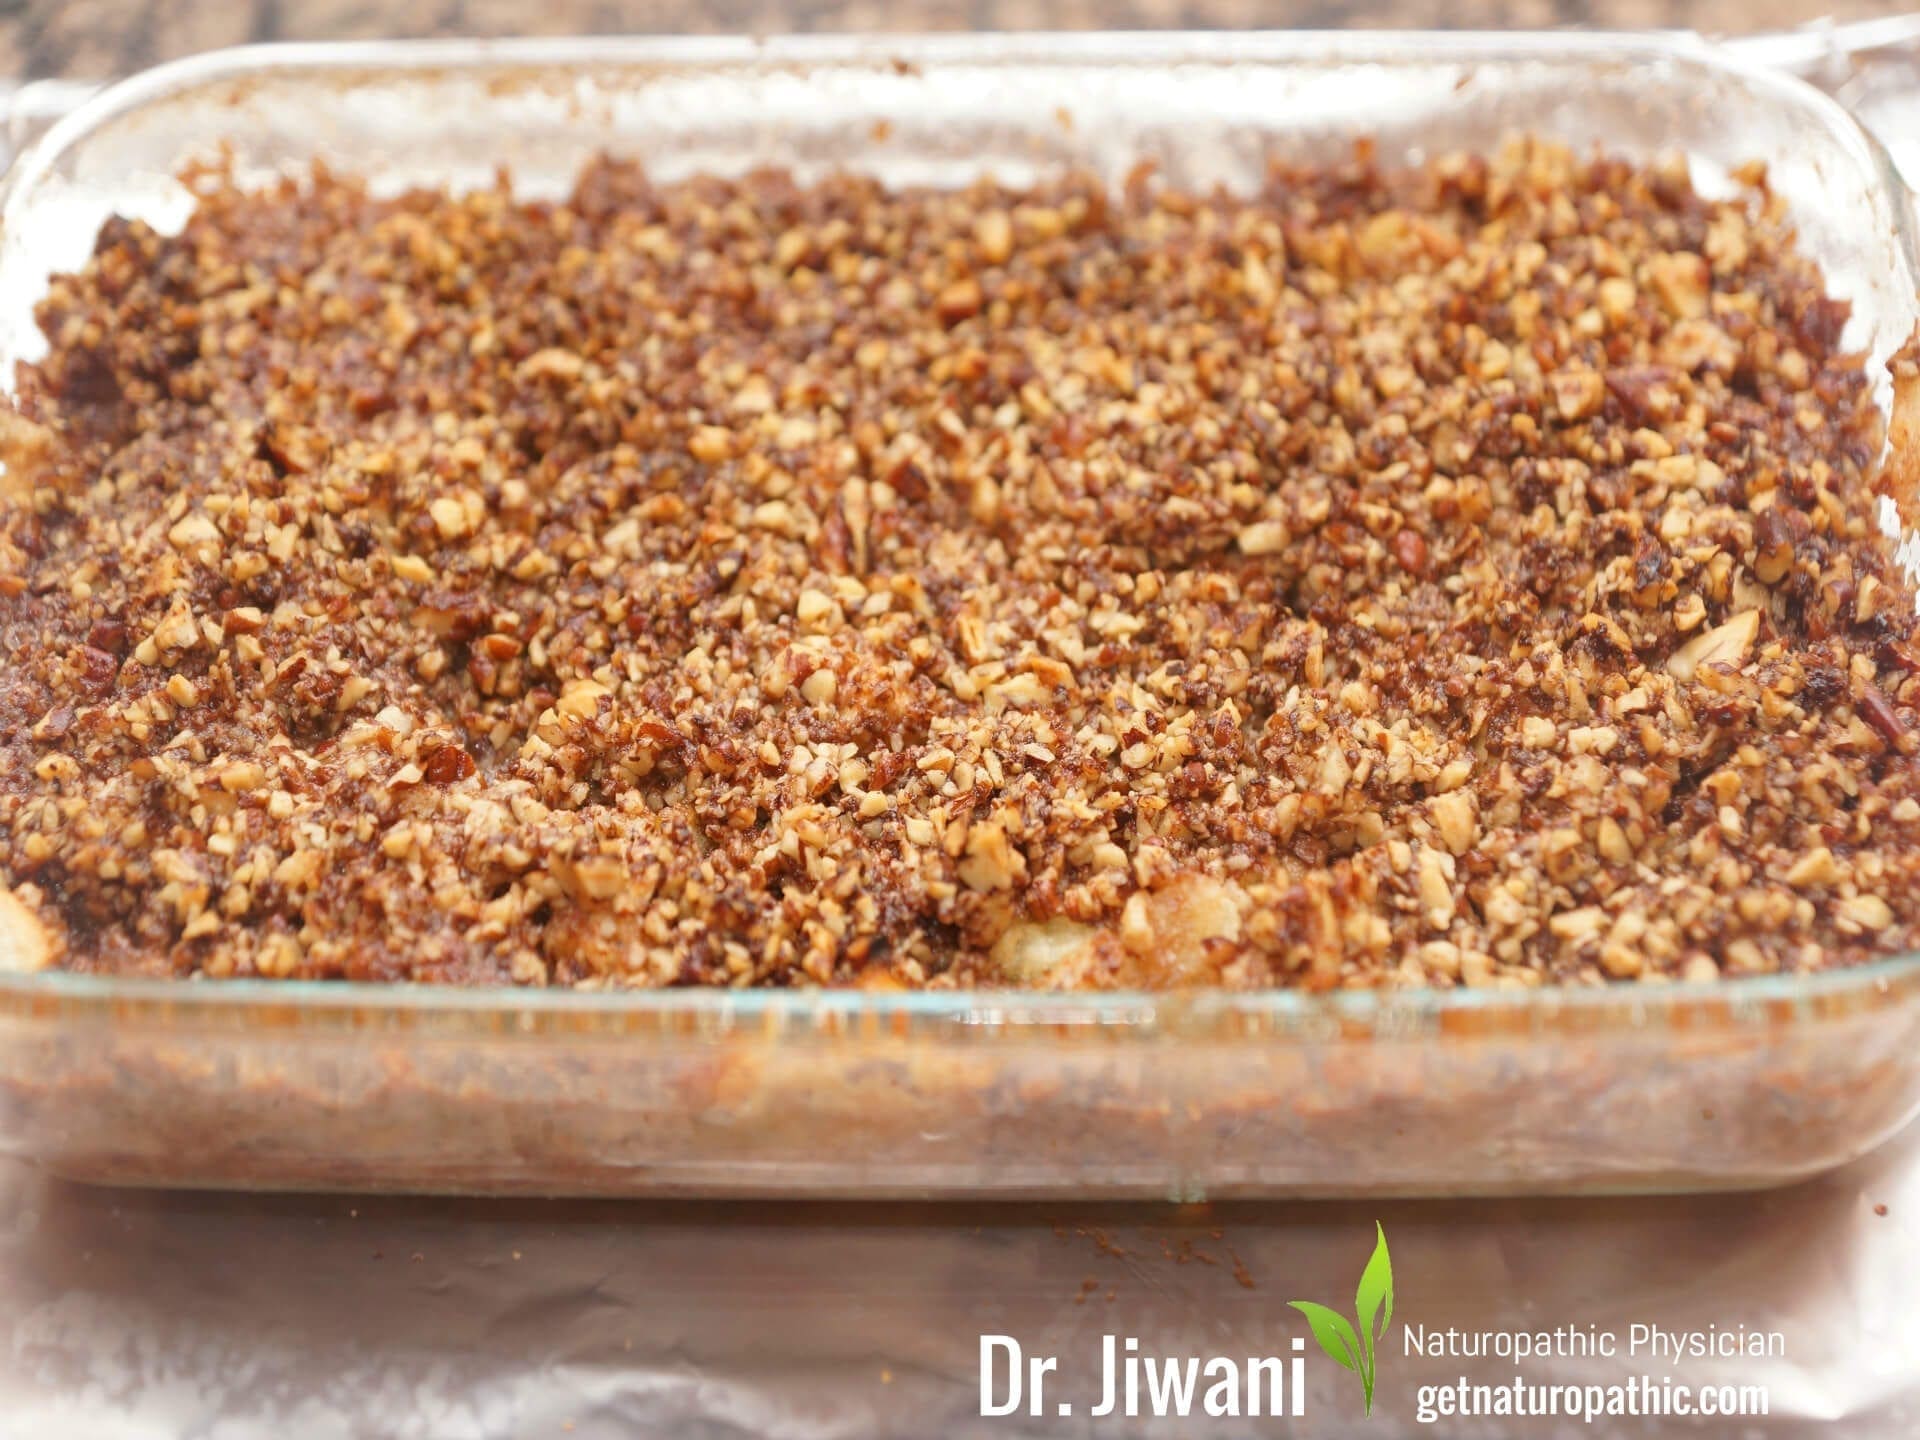 Dr. Jiwani's Oat-Free Vegan Apple Crisp Recipe: Gluten-Free, Egg-Free, Dairy-Free, Soy-Free, Sugar-Free, Corn-Free, Ideal For Diabetic, Paleo, Keto, Vegan & Candida Diets | Dr. Jiwani's Naturopathic Nuggets Blog